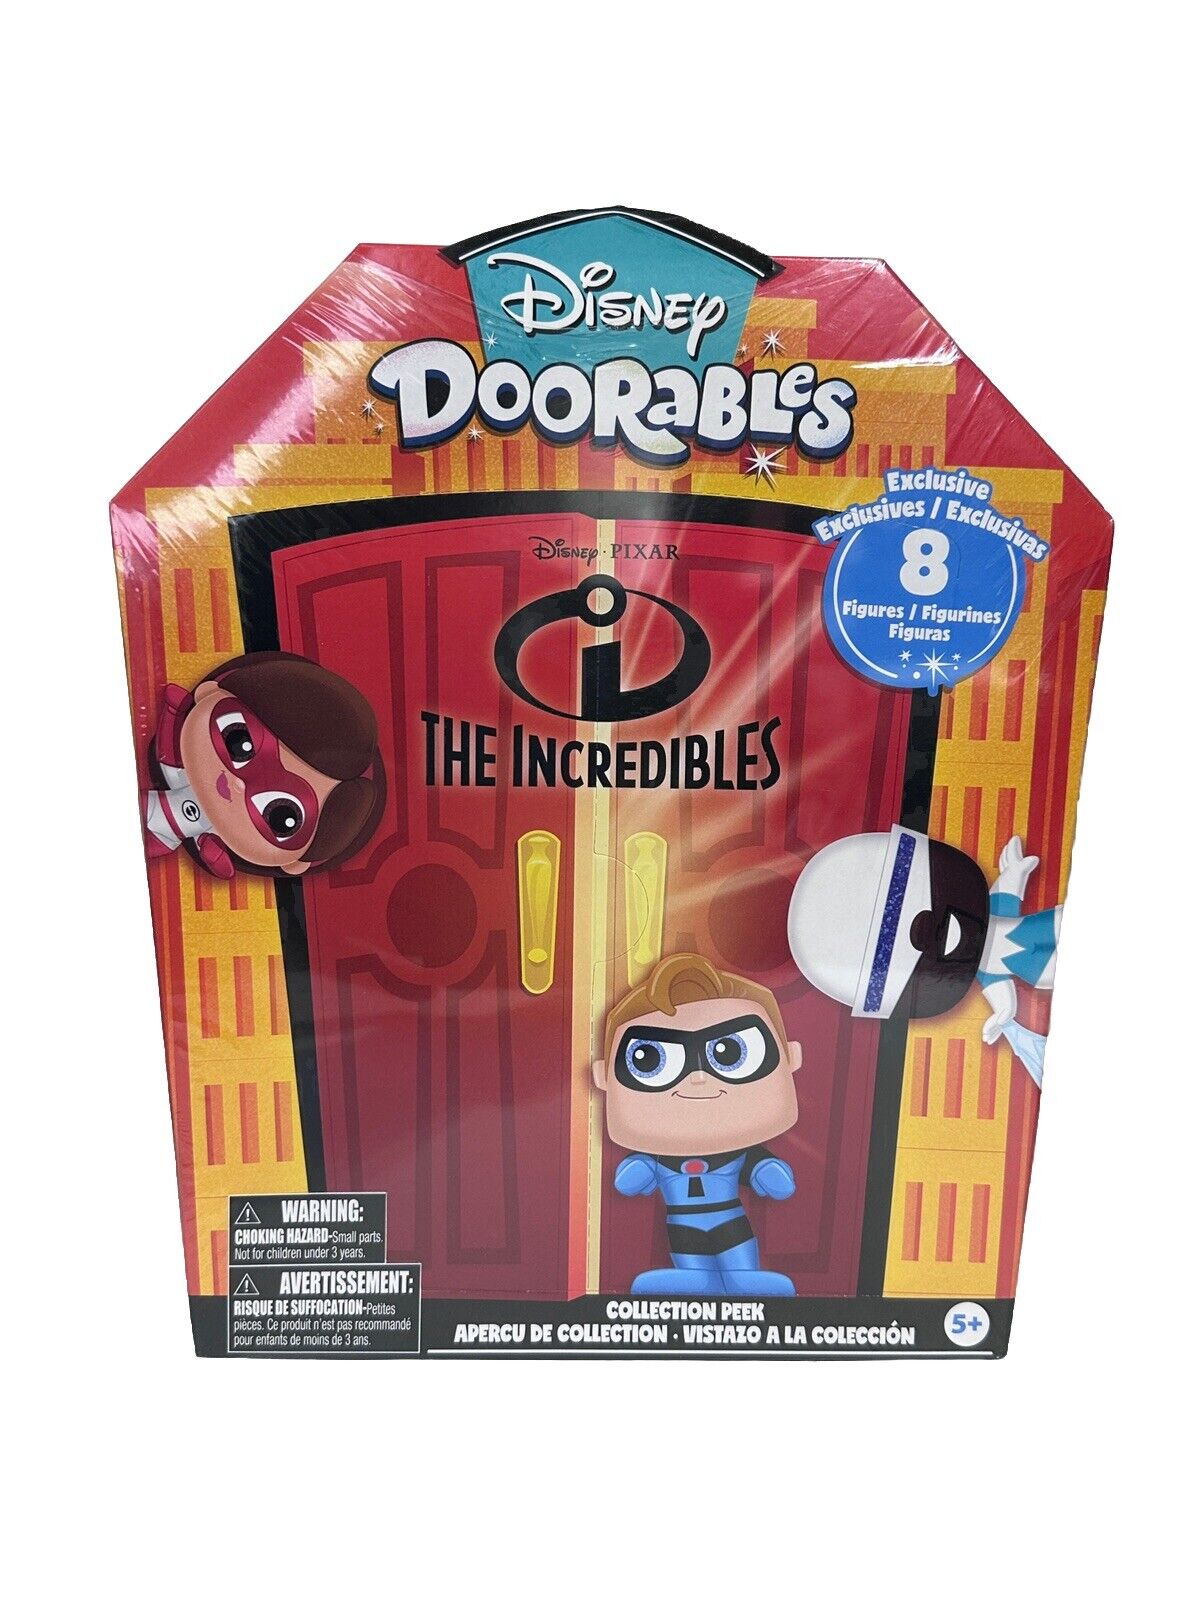 Disney Doorables The Incredibles 8 Figures - Collection Peek **NEW IN BOX**